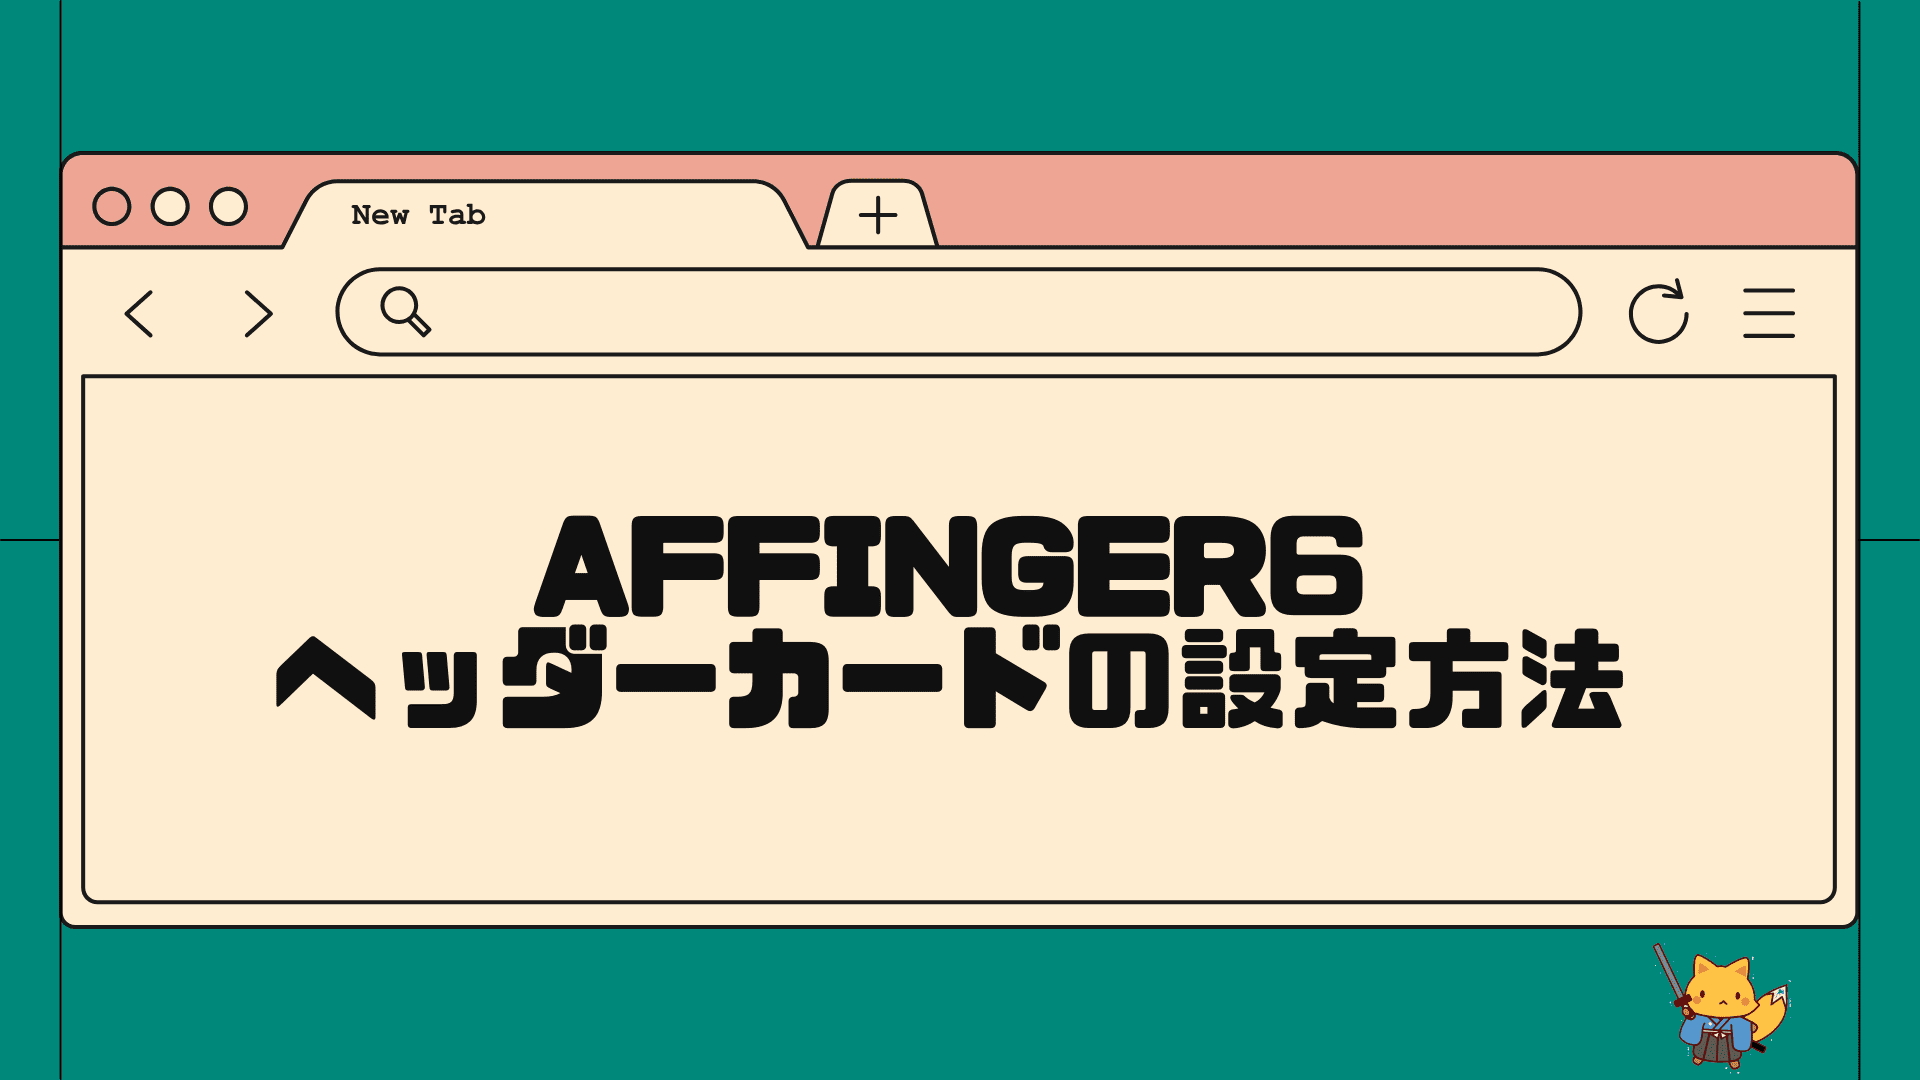 affinger6のヘッダーカードの設定方法